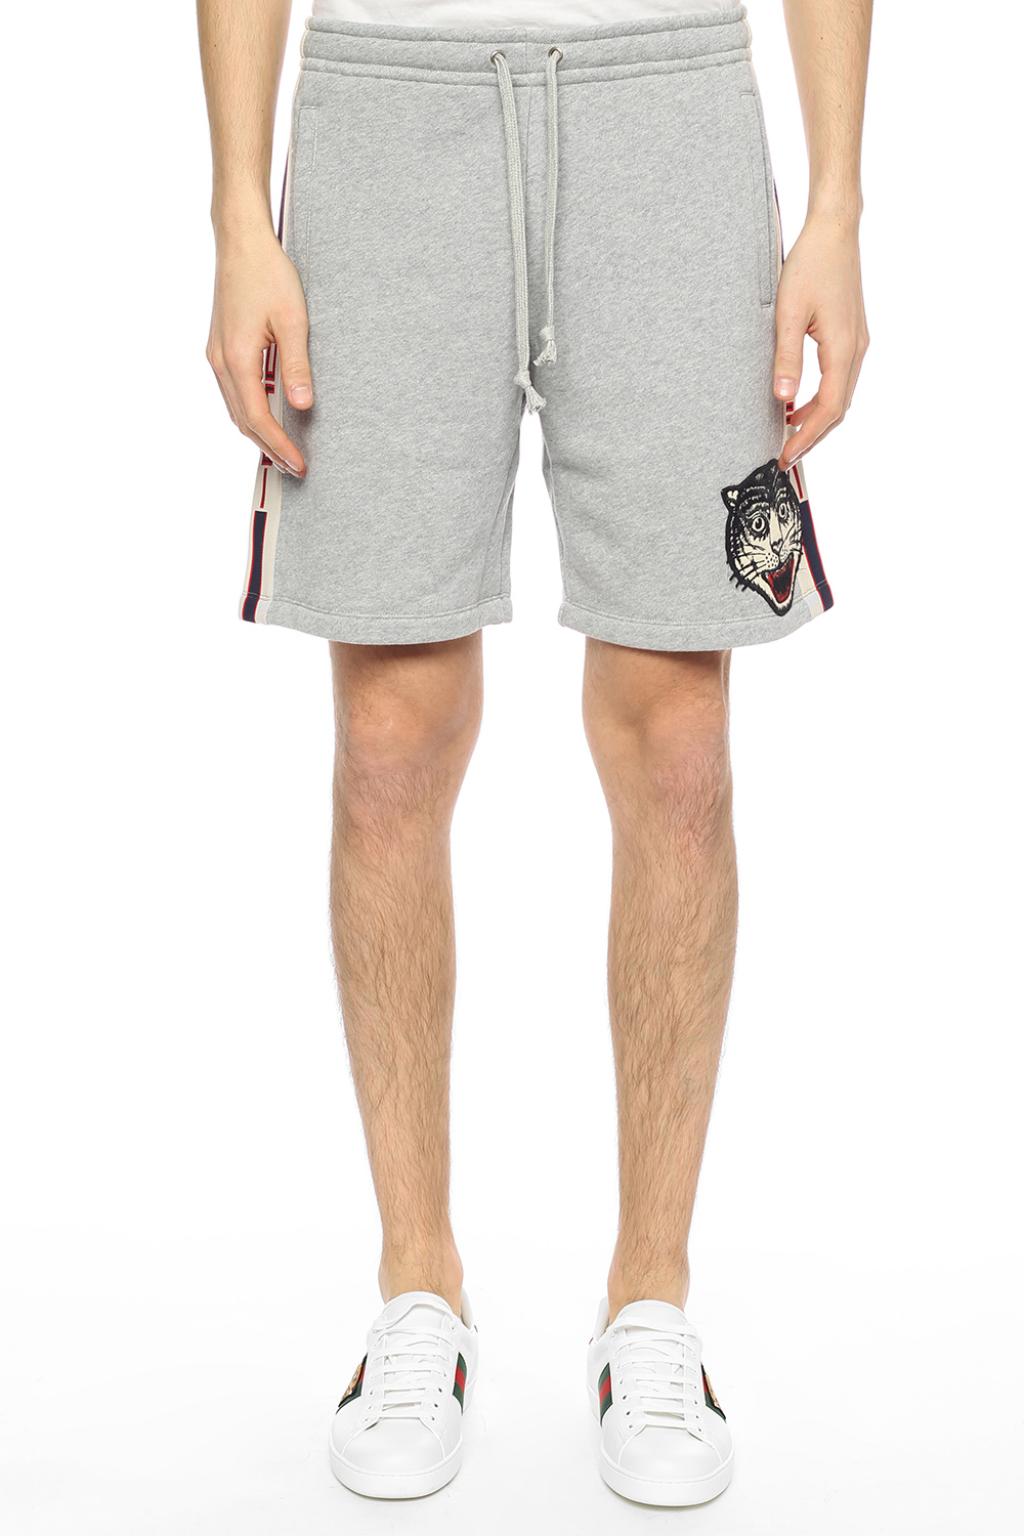 gucci fleece shorts